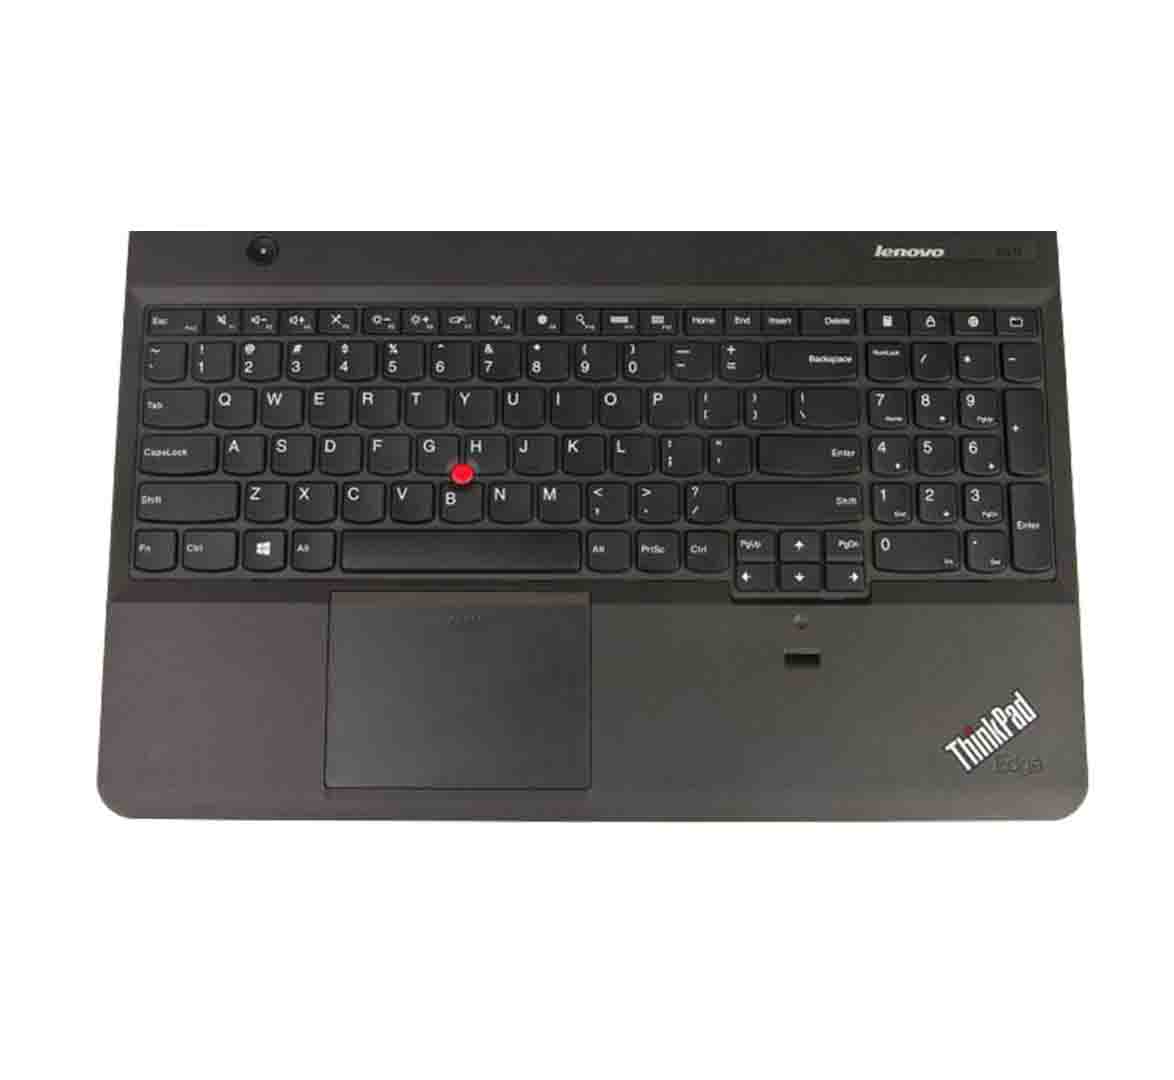 Lenovo ThinkPad E531 Business Laptop, Intel Core i5-3rd Generation CPU, 8GB RAM, 256GB SSD, 15.6 inch Display, Windows 10 Pro, Refurbished Laptop